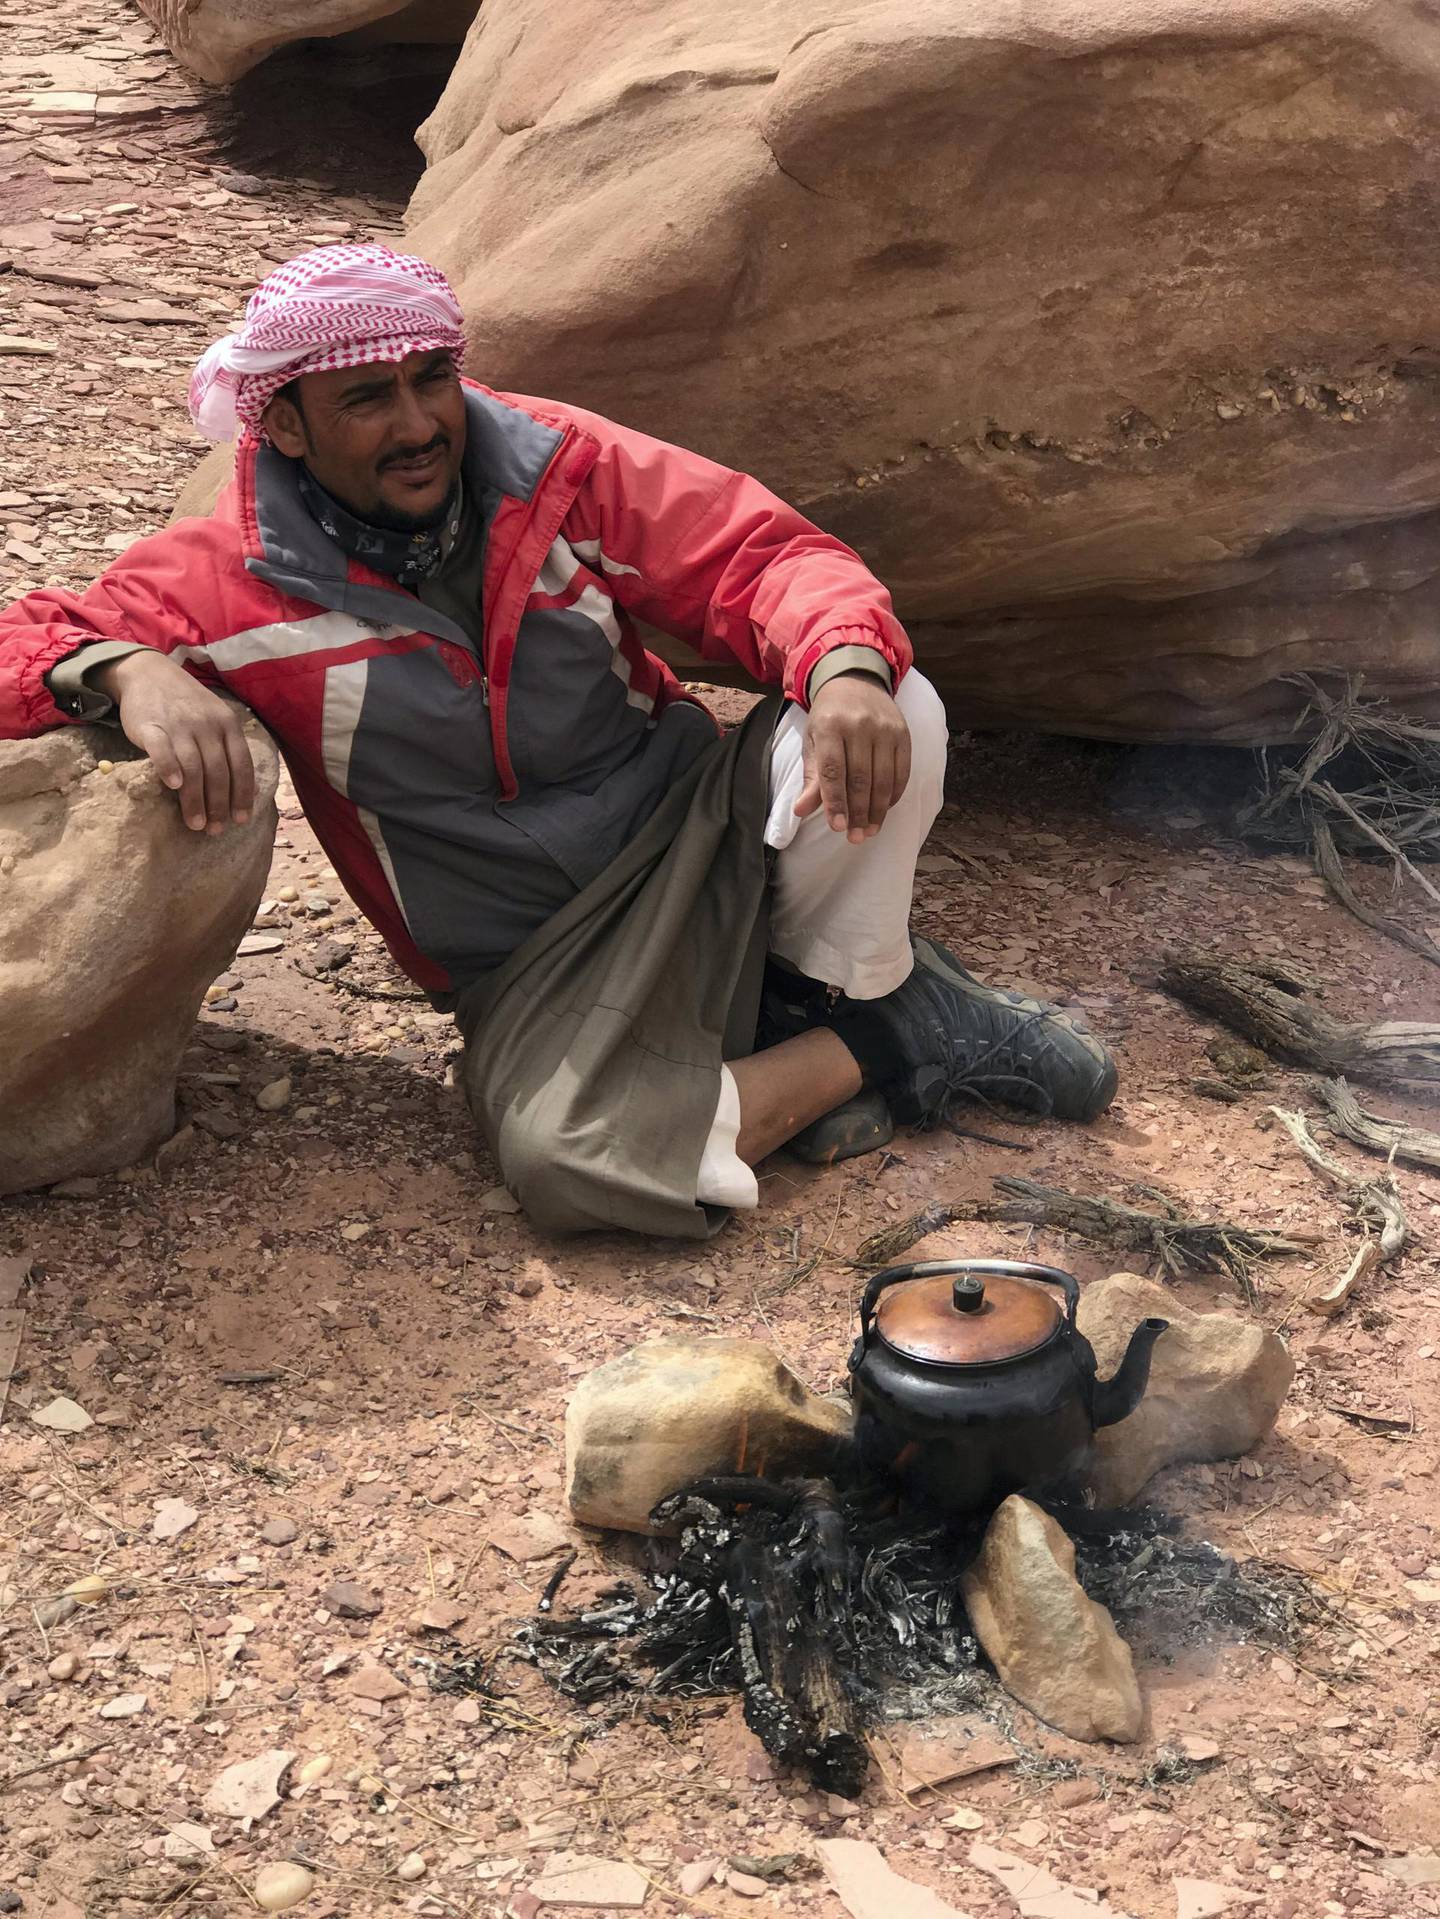 Salem stops to brew tea during a trek in Wadi Rum. 